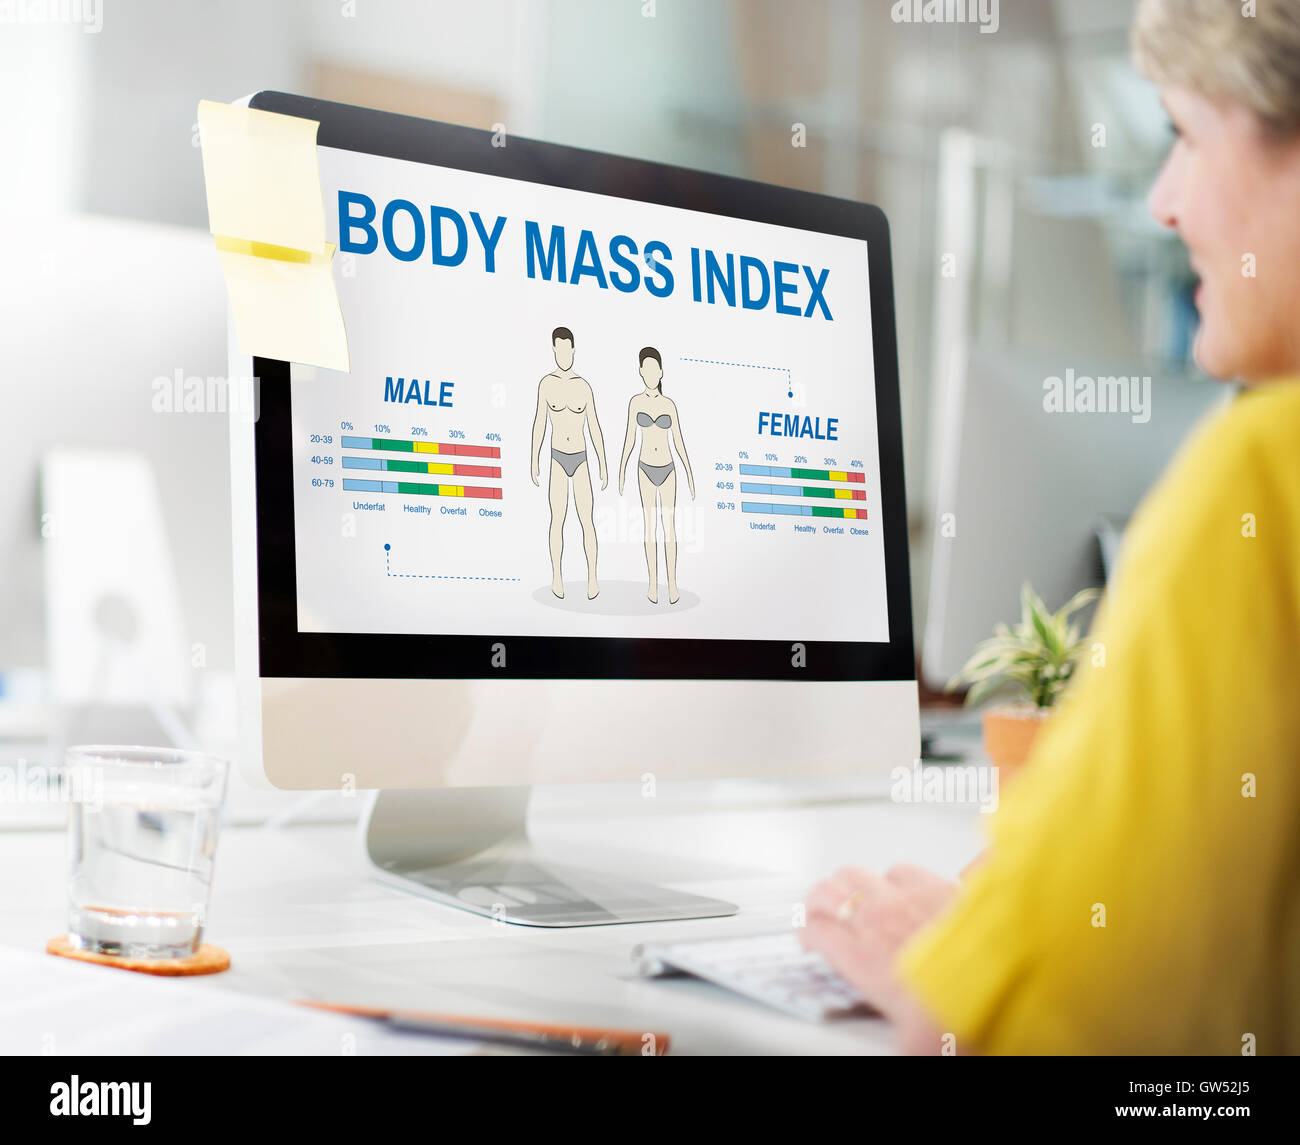 Health Check Annual Checkup Body Biology Concept Stock Photo